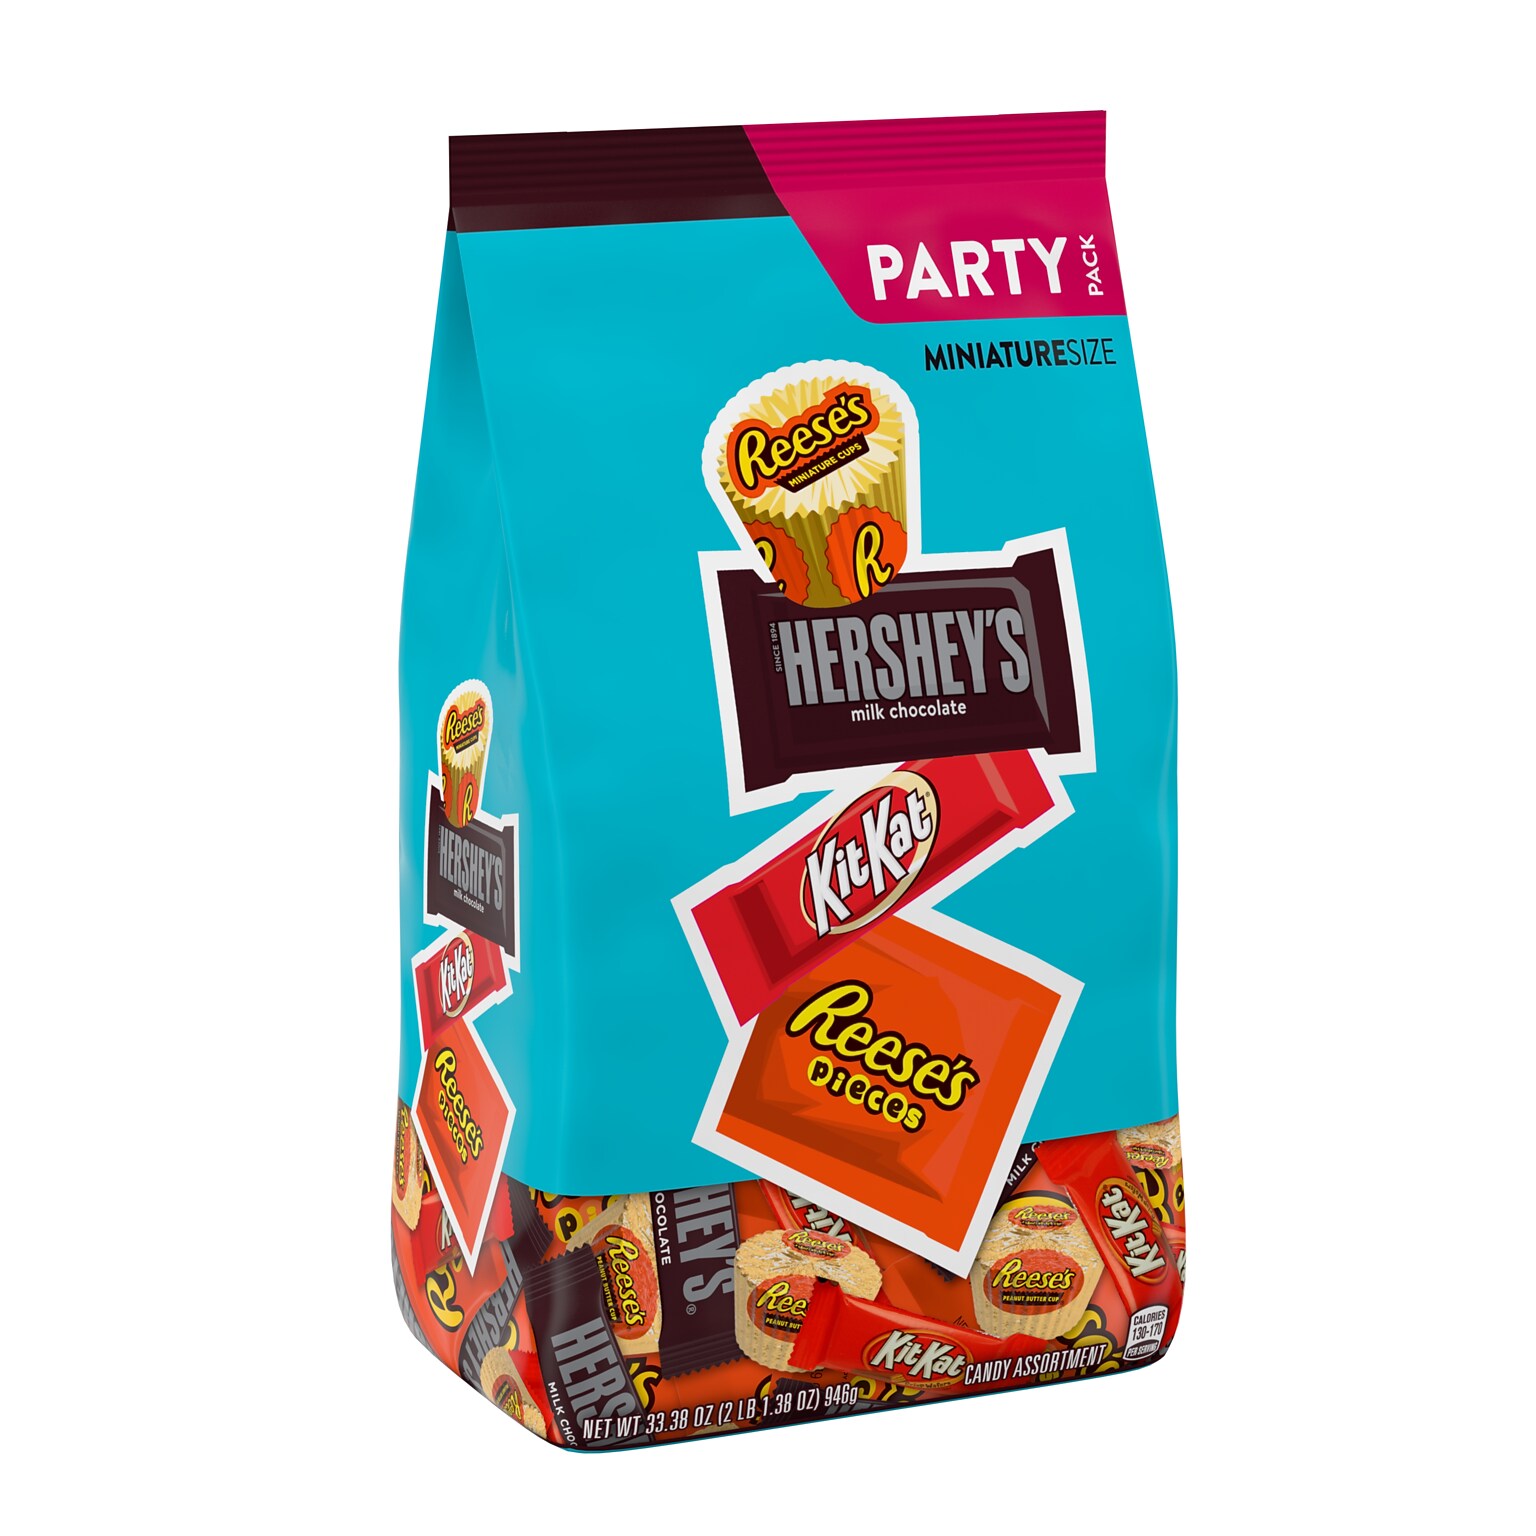 Hersheys Party Pack Miniatures Reeses, Hersheys, KitKAt & Reeses Pieces Milk Chocolate Variety, 33.38 oz. (HEC39991)